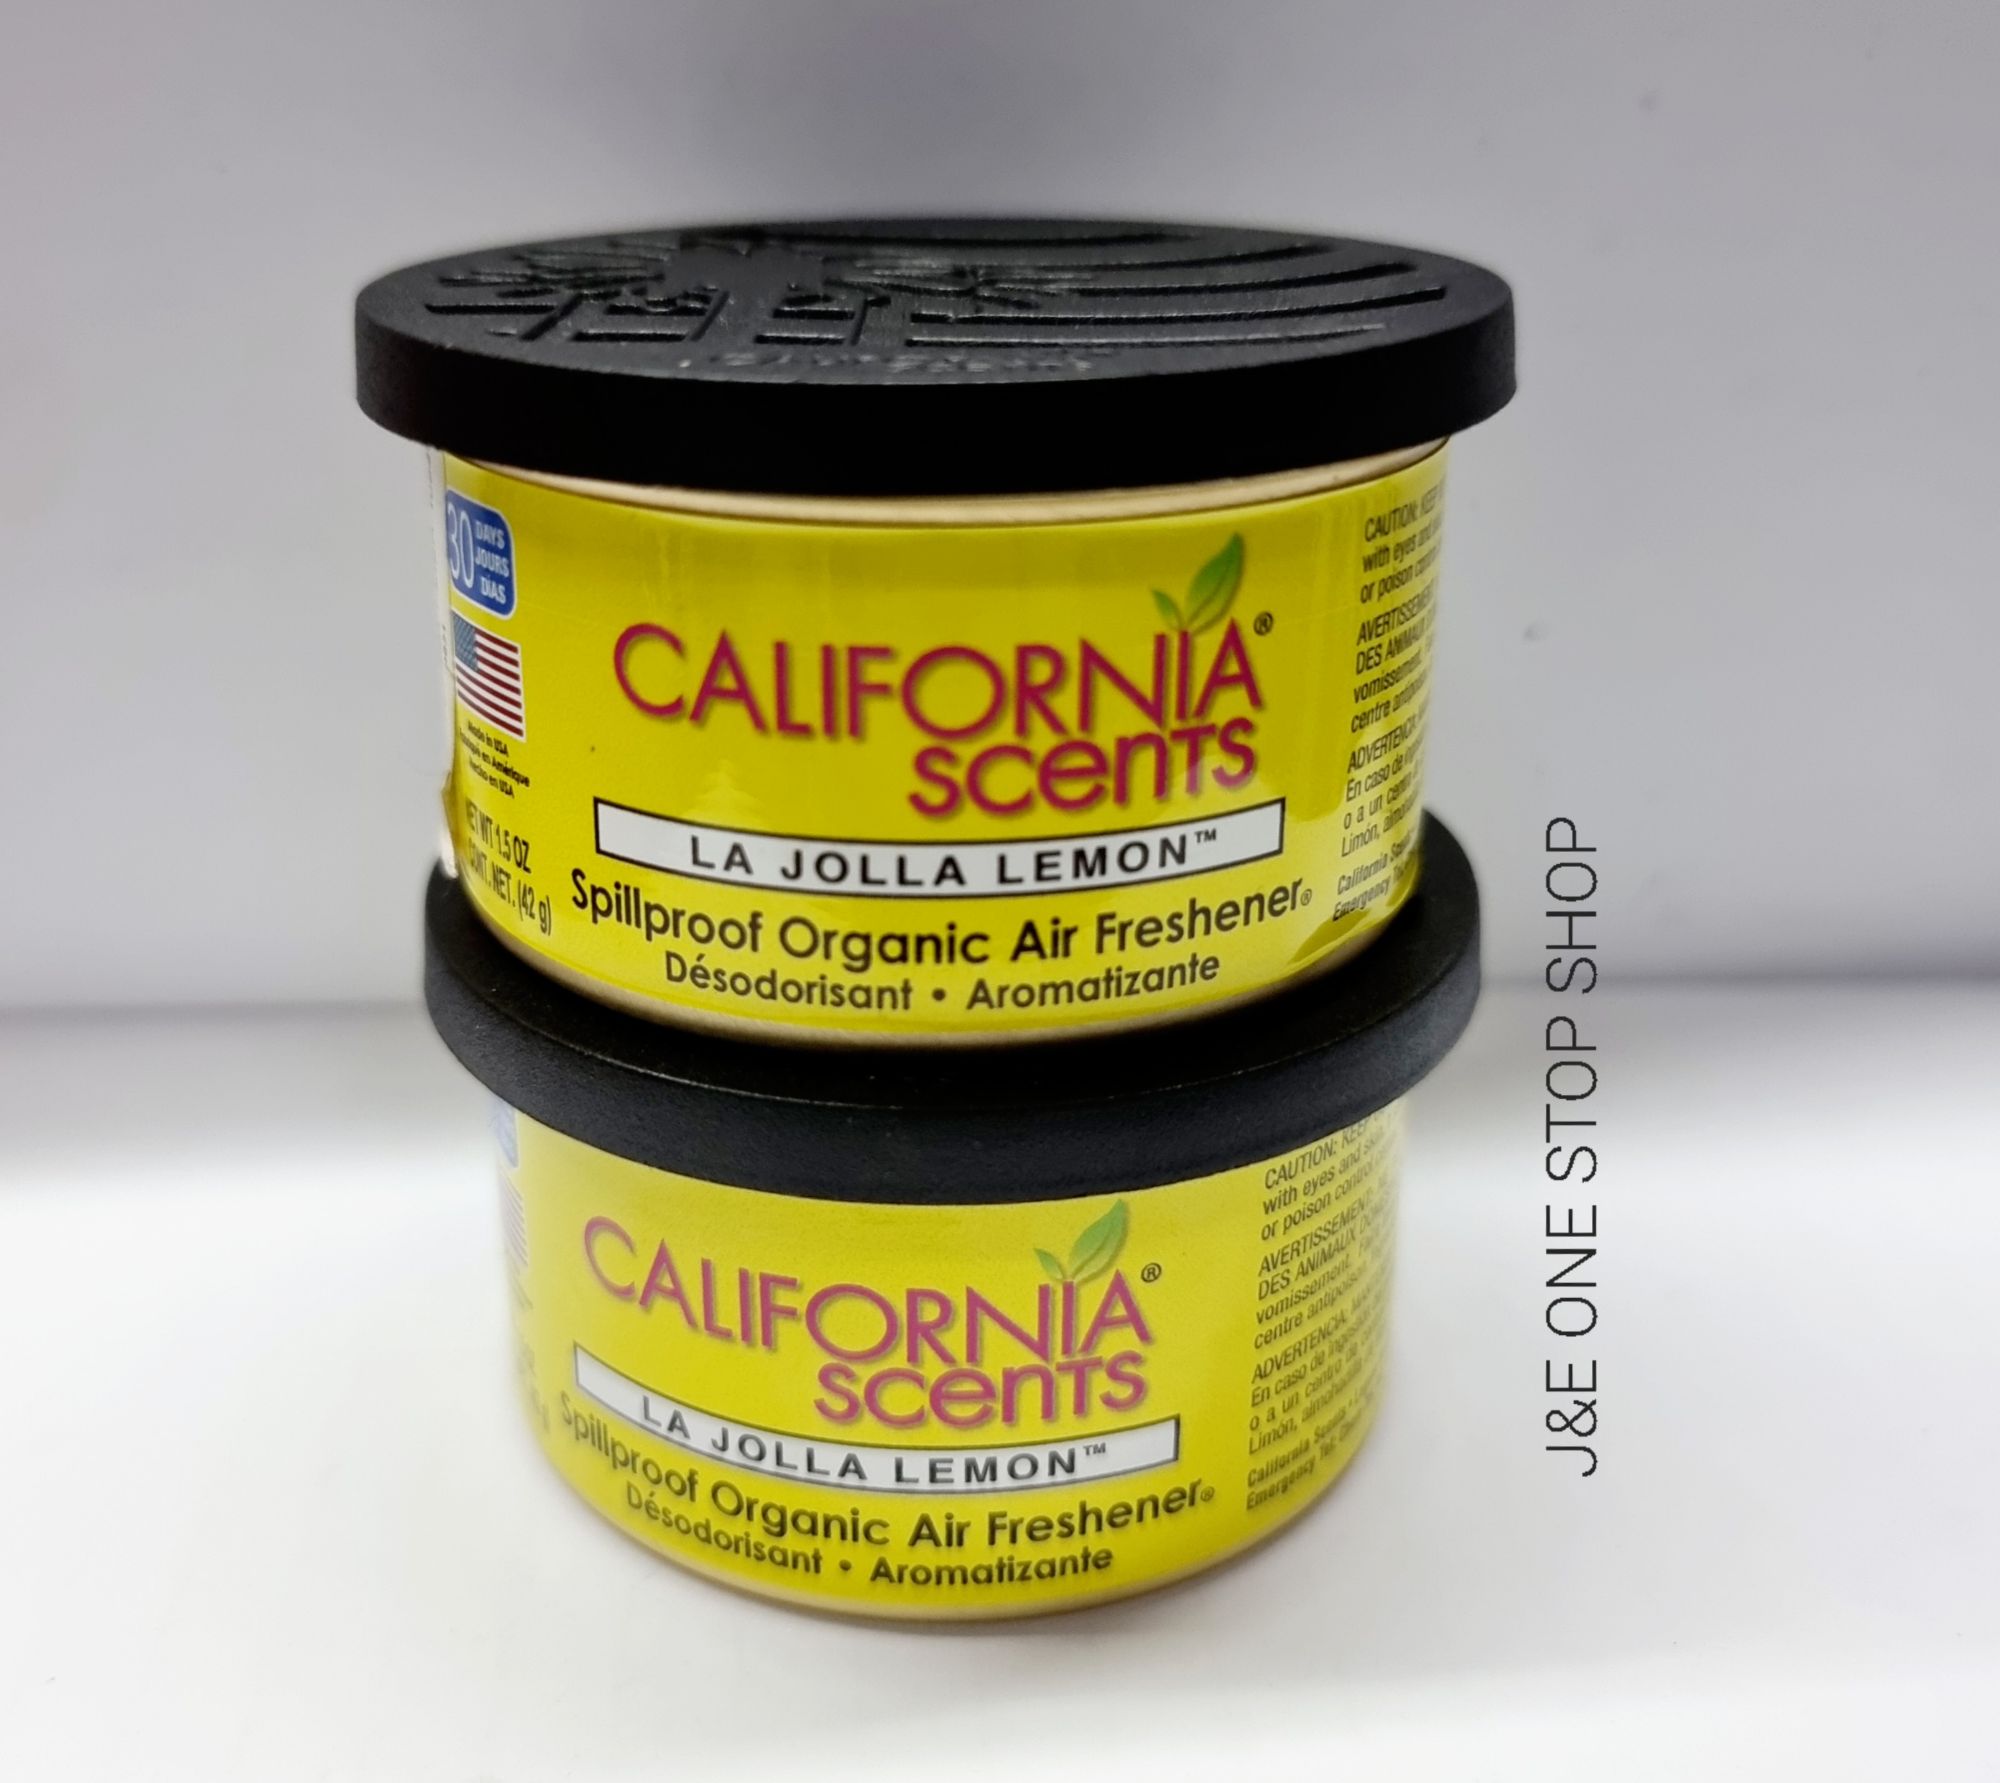  California Scents Spillproof Organic Air Freshener